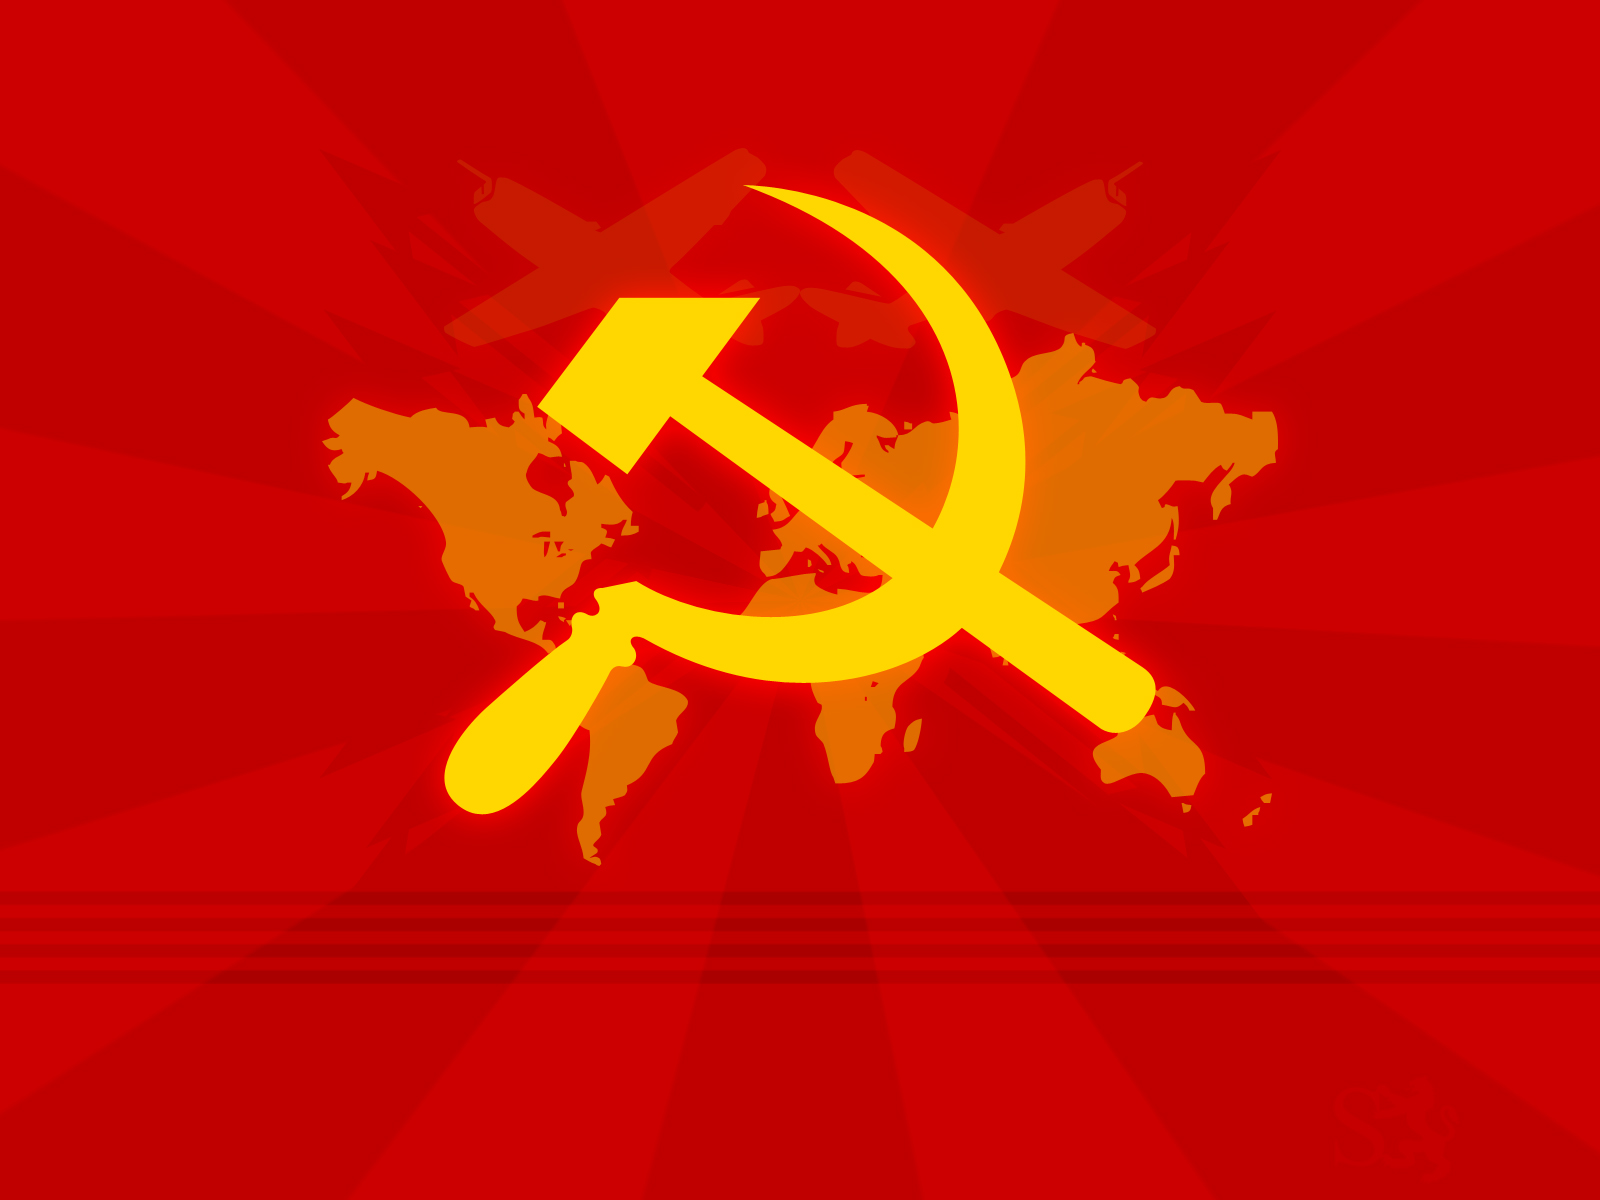 Perbedaan antara ideologi pancasila dan ideologi komunis